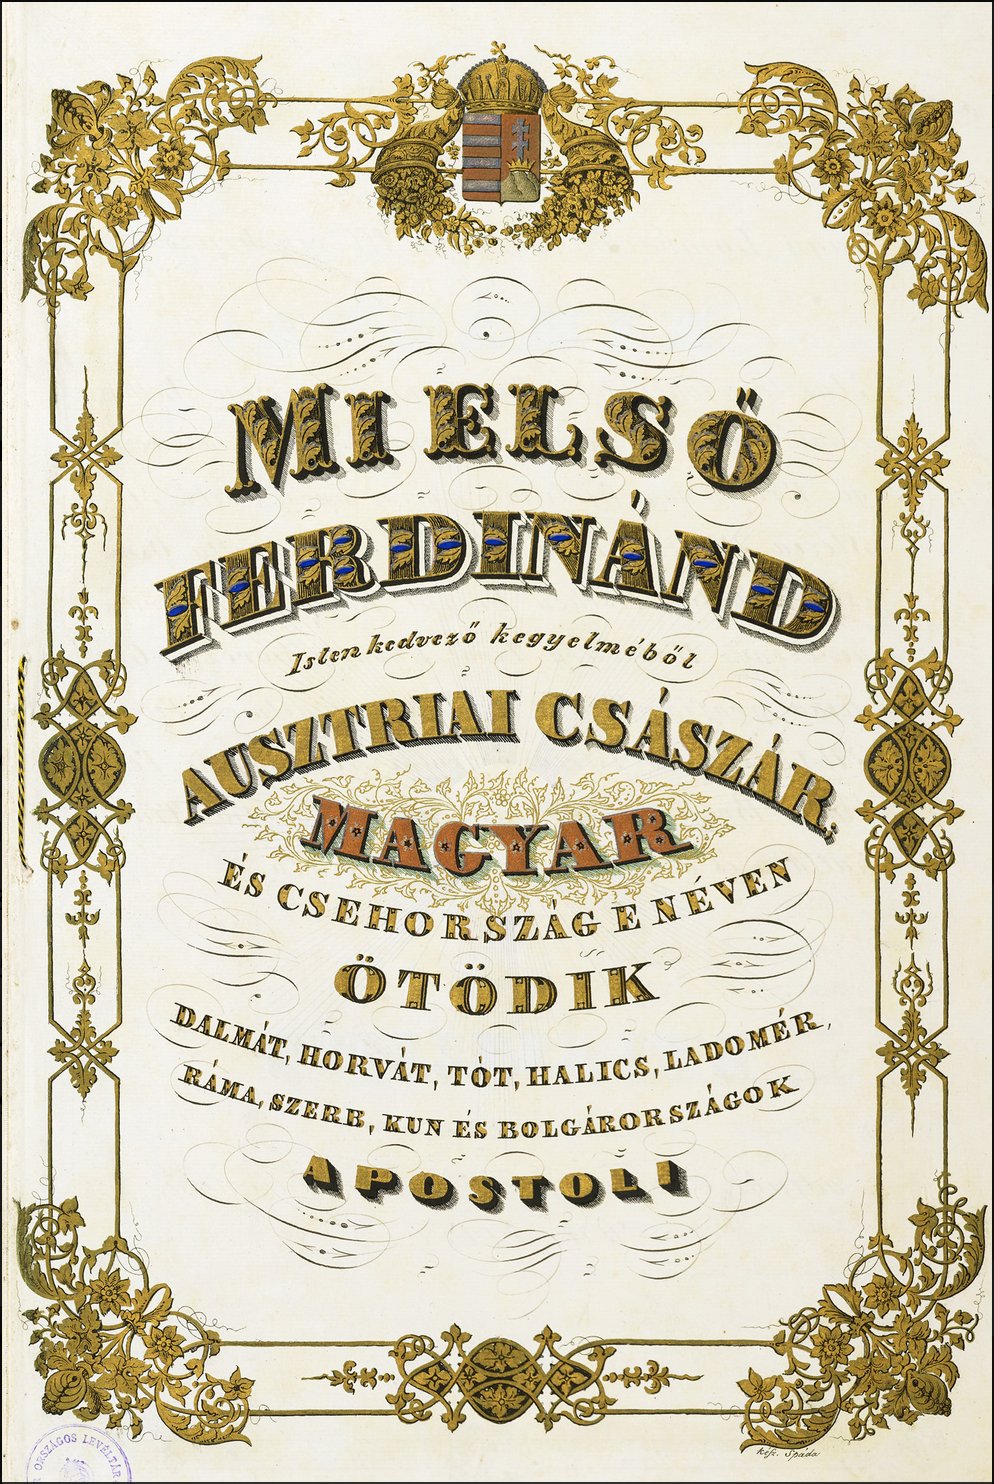 The 1848 April Laws, National Archives of Hungary (HU_MNL_OL_N_0045_LadH_SerA_Fasc2_1848) The full text is available at this link: https://mnl.gov.hu/mnl/ol/galeria/1848_aprilisi_torvenyek_reszlet
